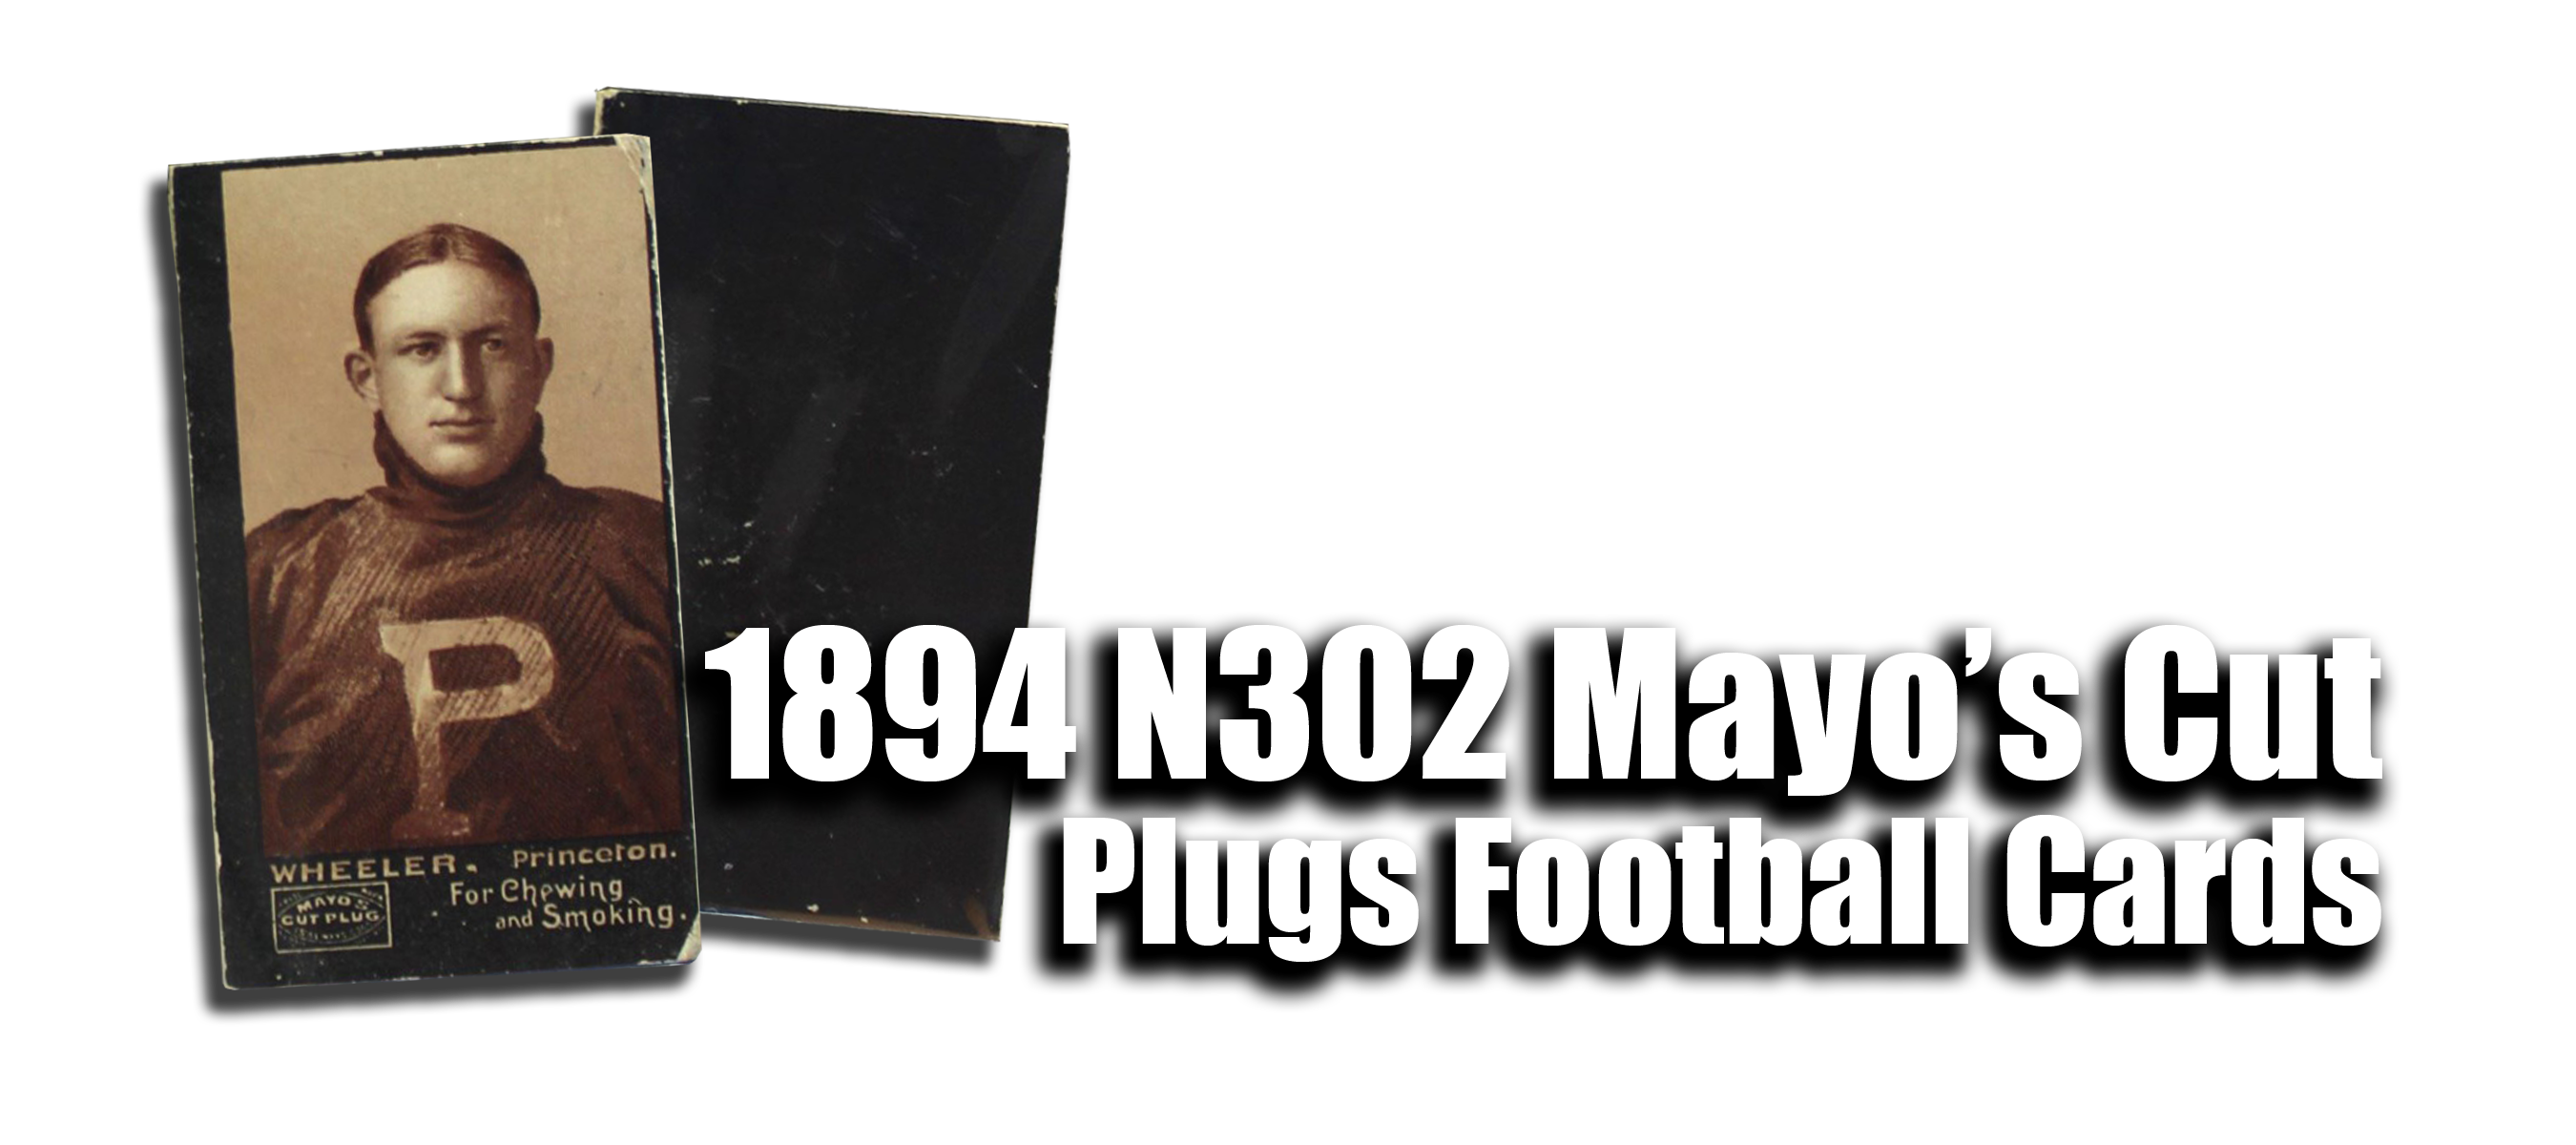 1894 N302 Mayo's Cut Plugs Football Cards 